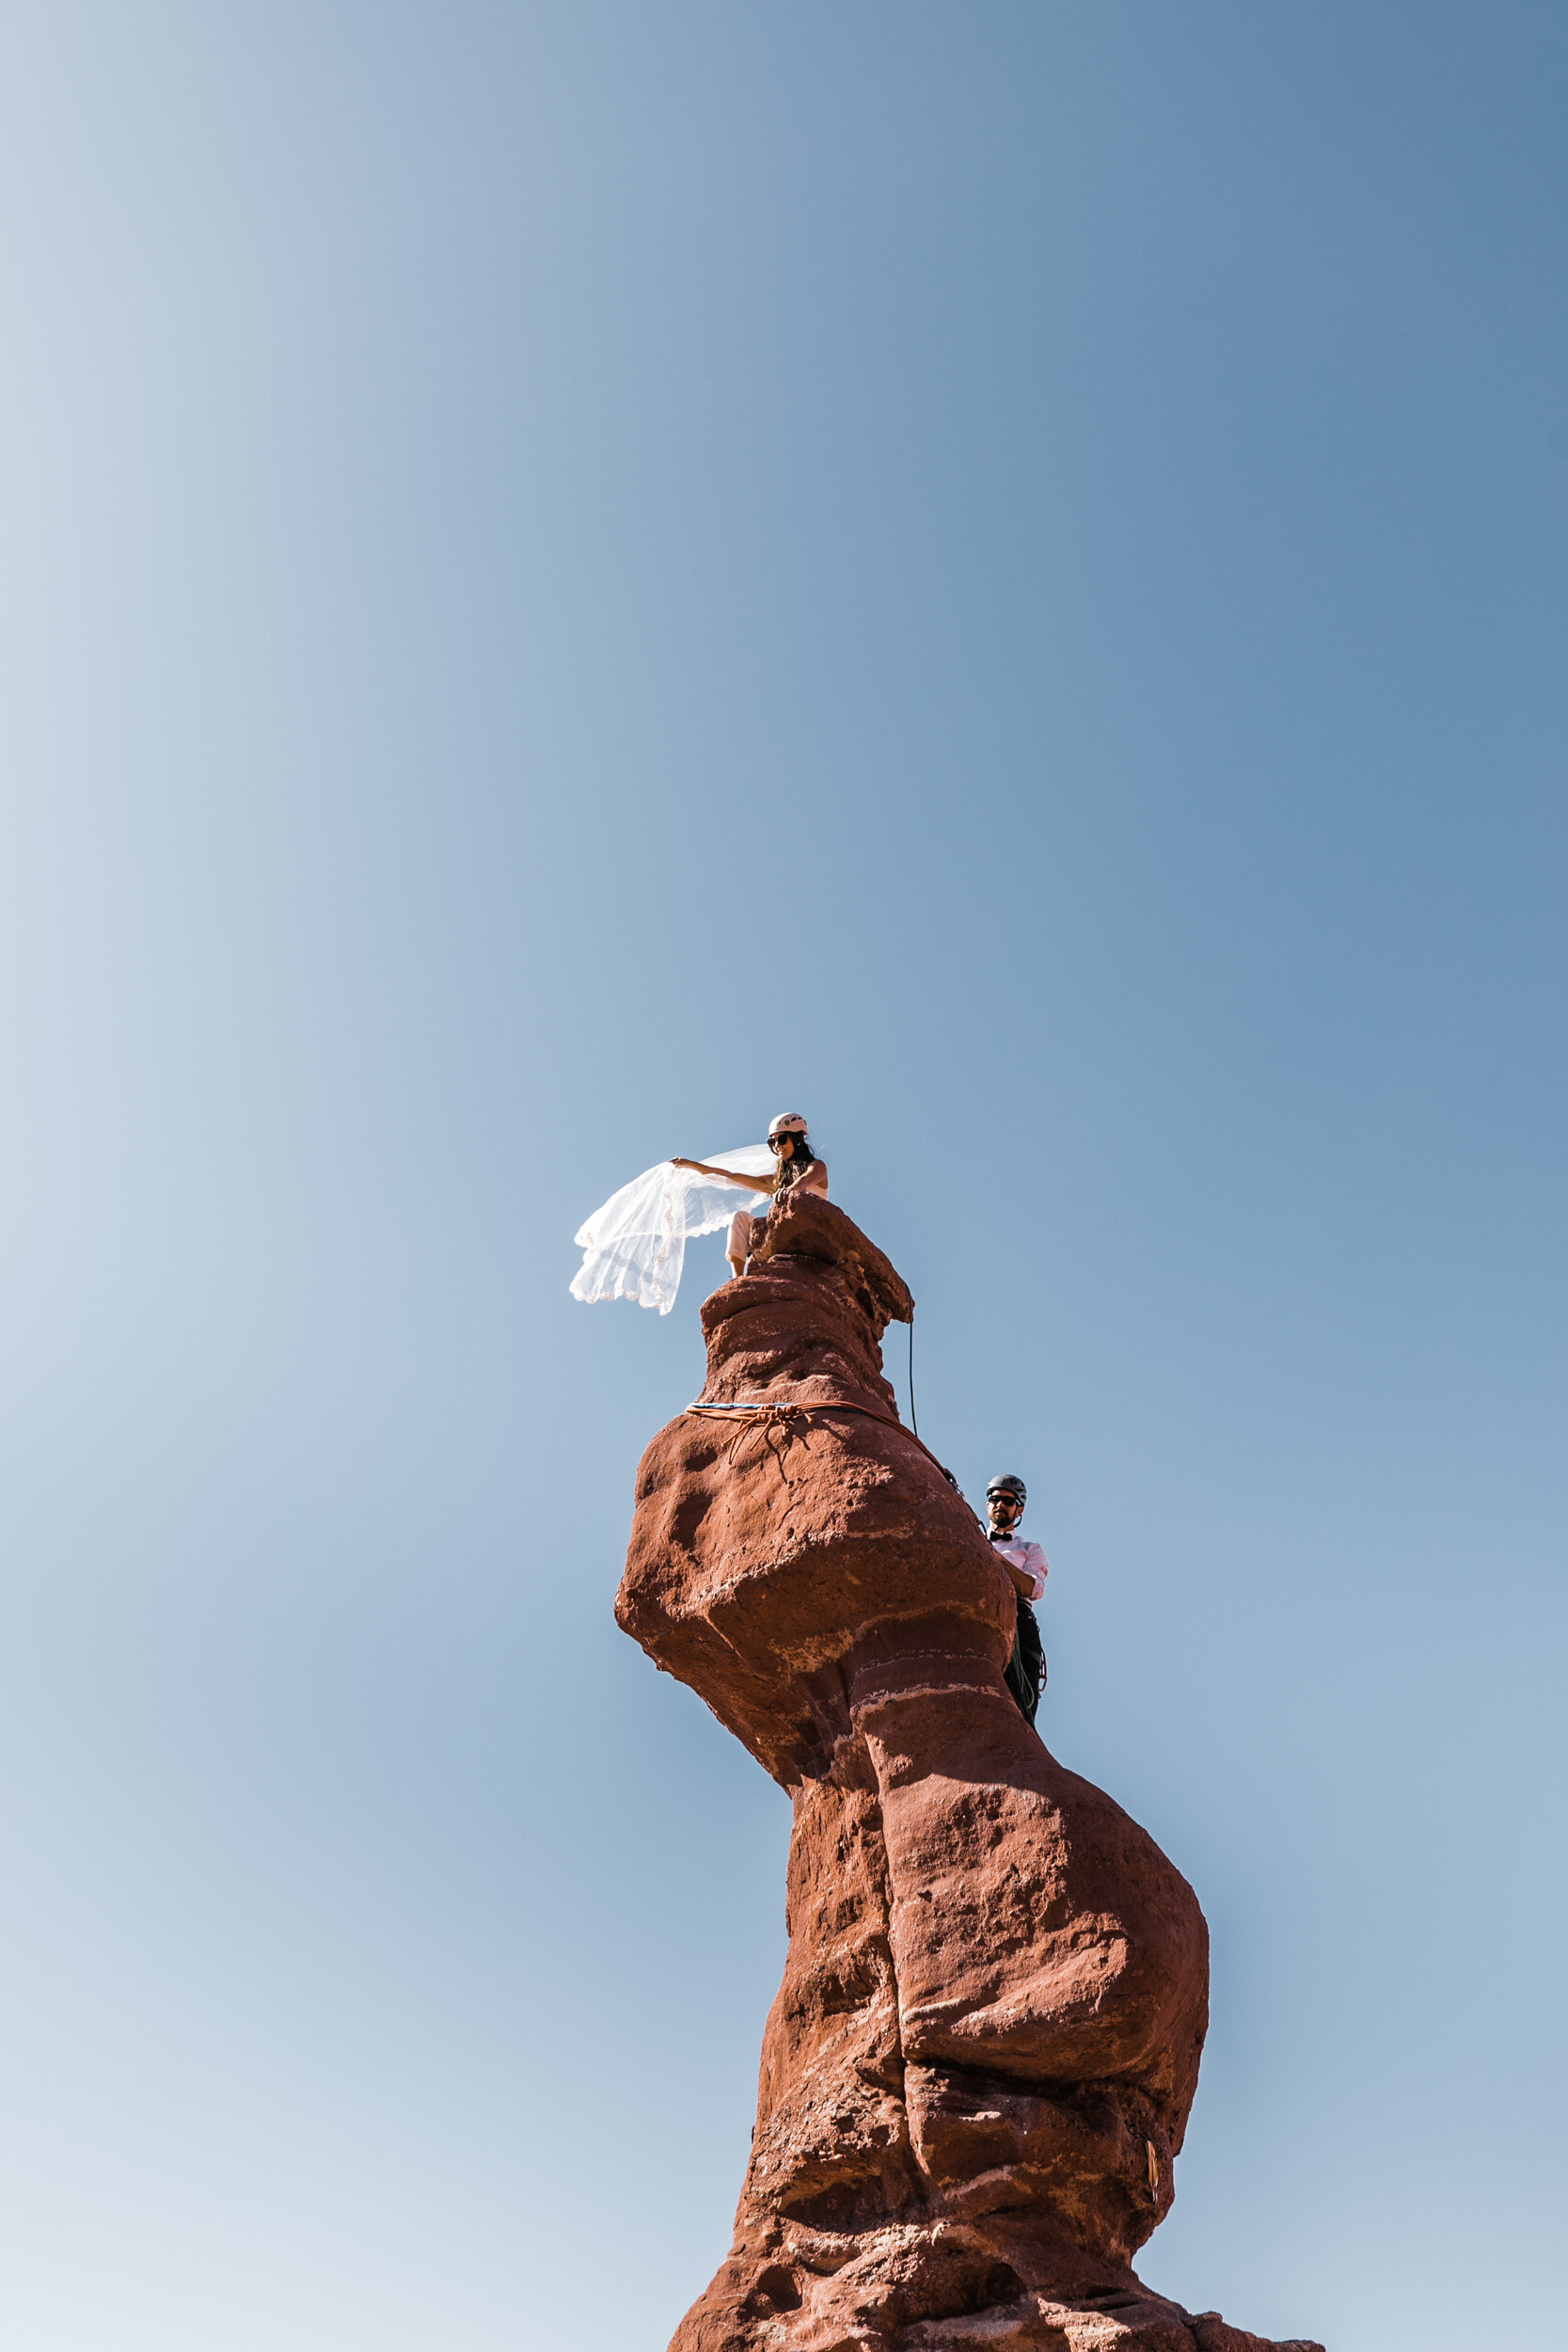 Rock Climbing wedding in Moab, Utah | Desert tower elopement | The Hearnes Adventure Photography